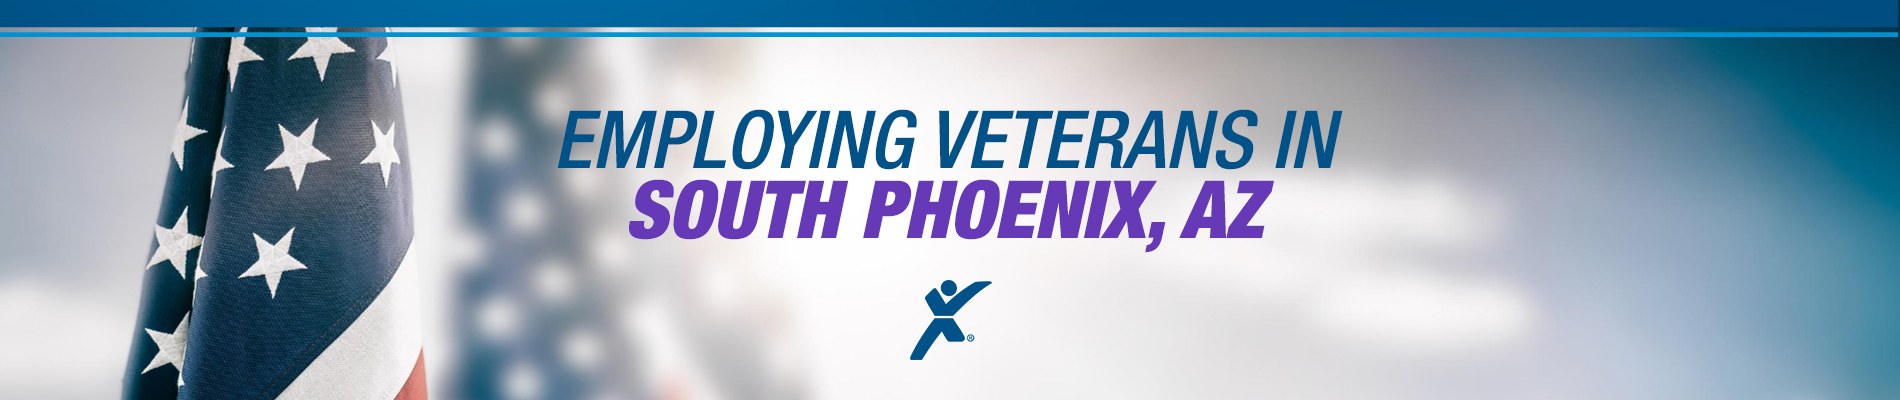 Express Employment for Veterans in Phoenix (S)- (602) 458-9500